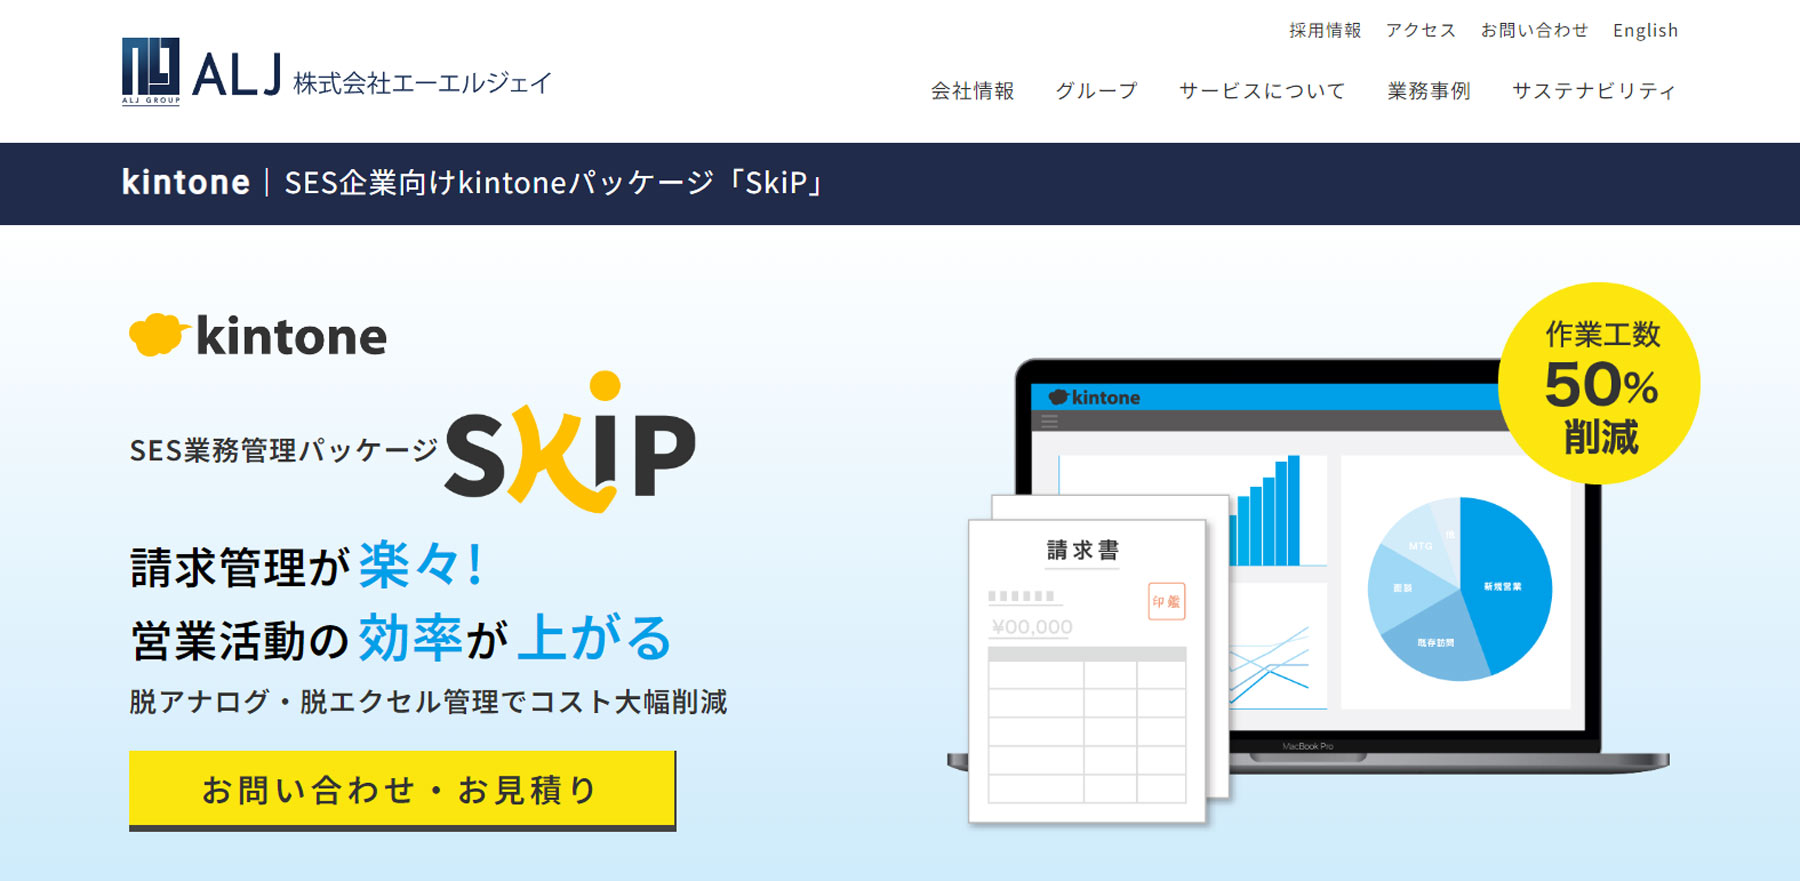 SkiP公式Webサイト